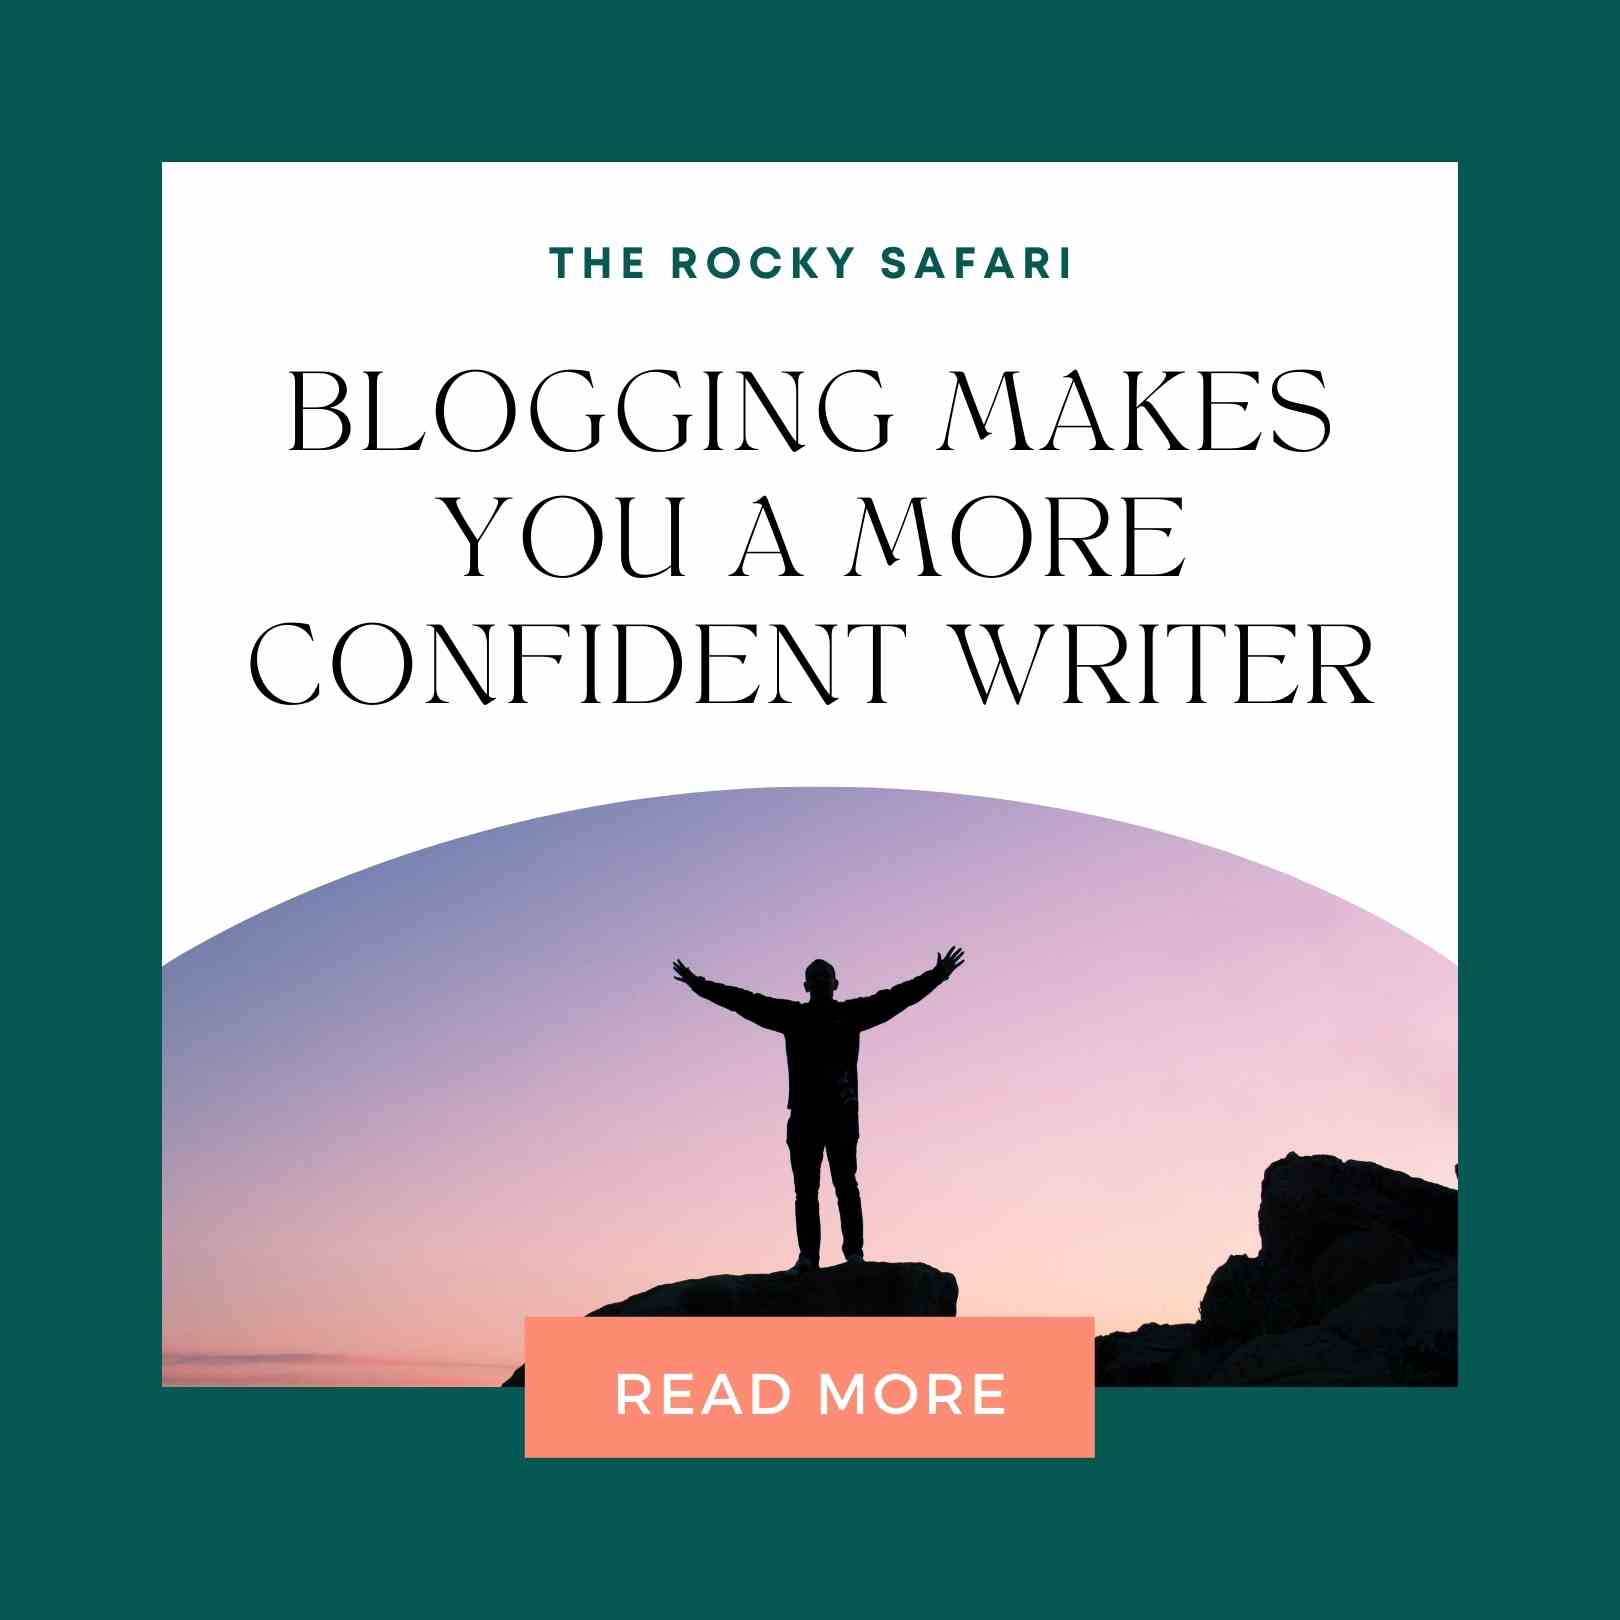 BLOGGING MAKES YOU A MORE CONFIDENT WRITER